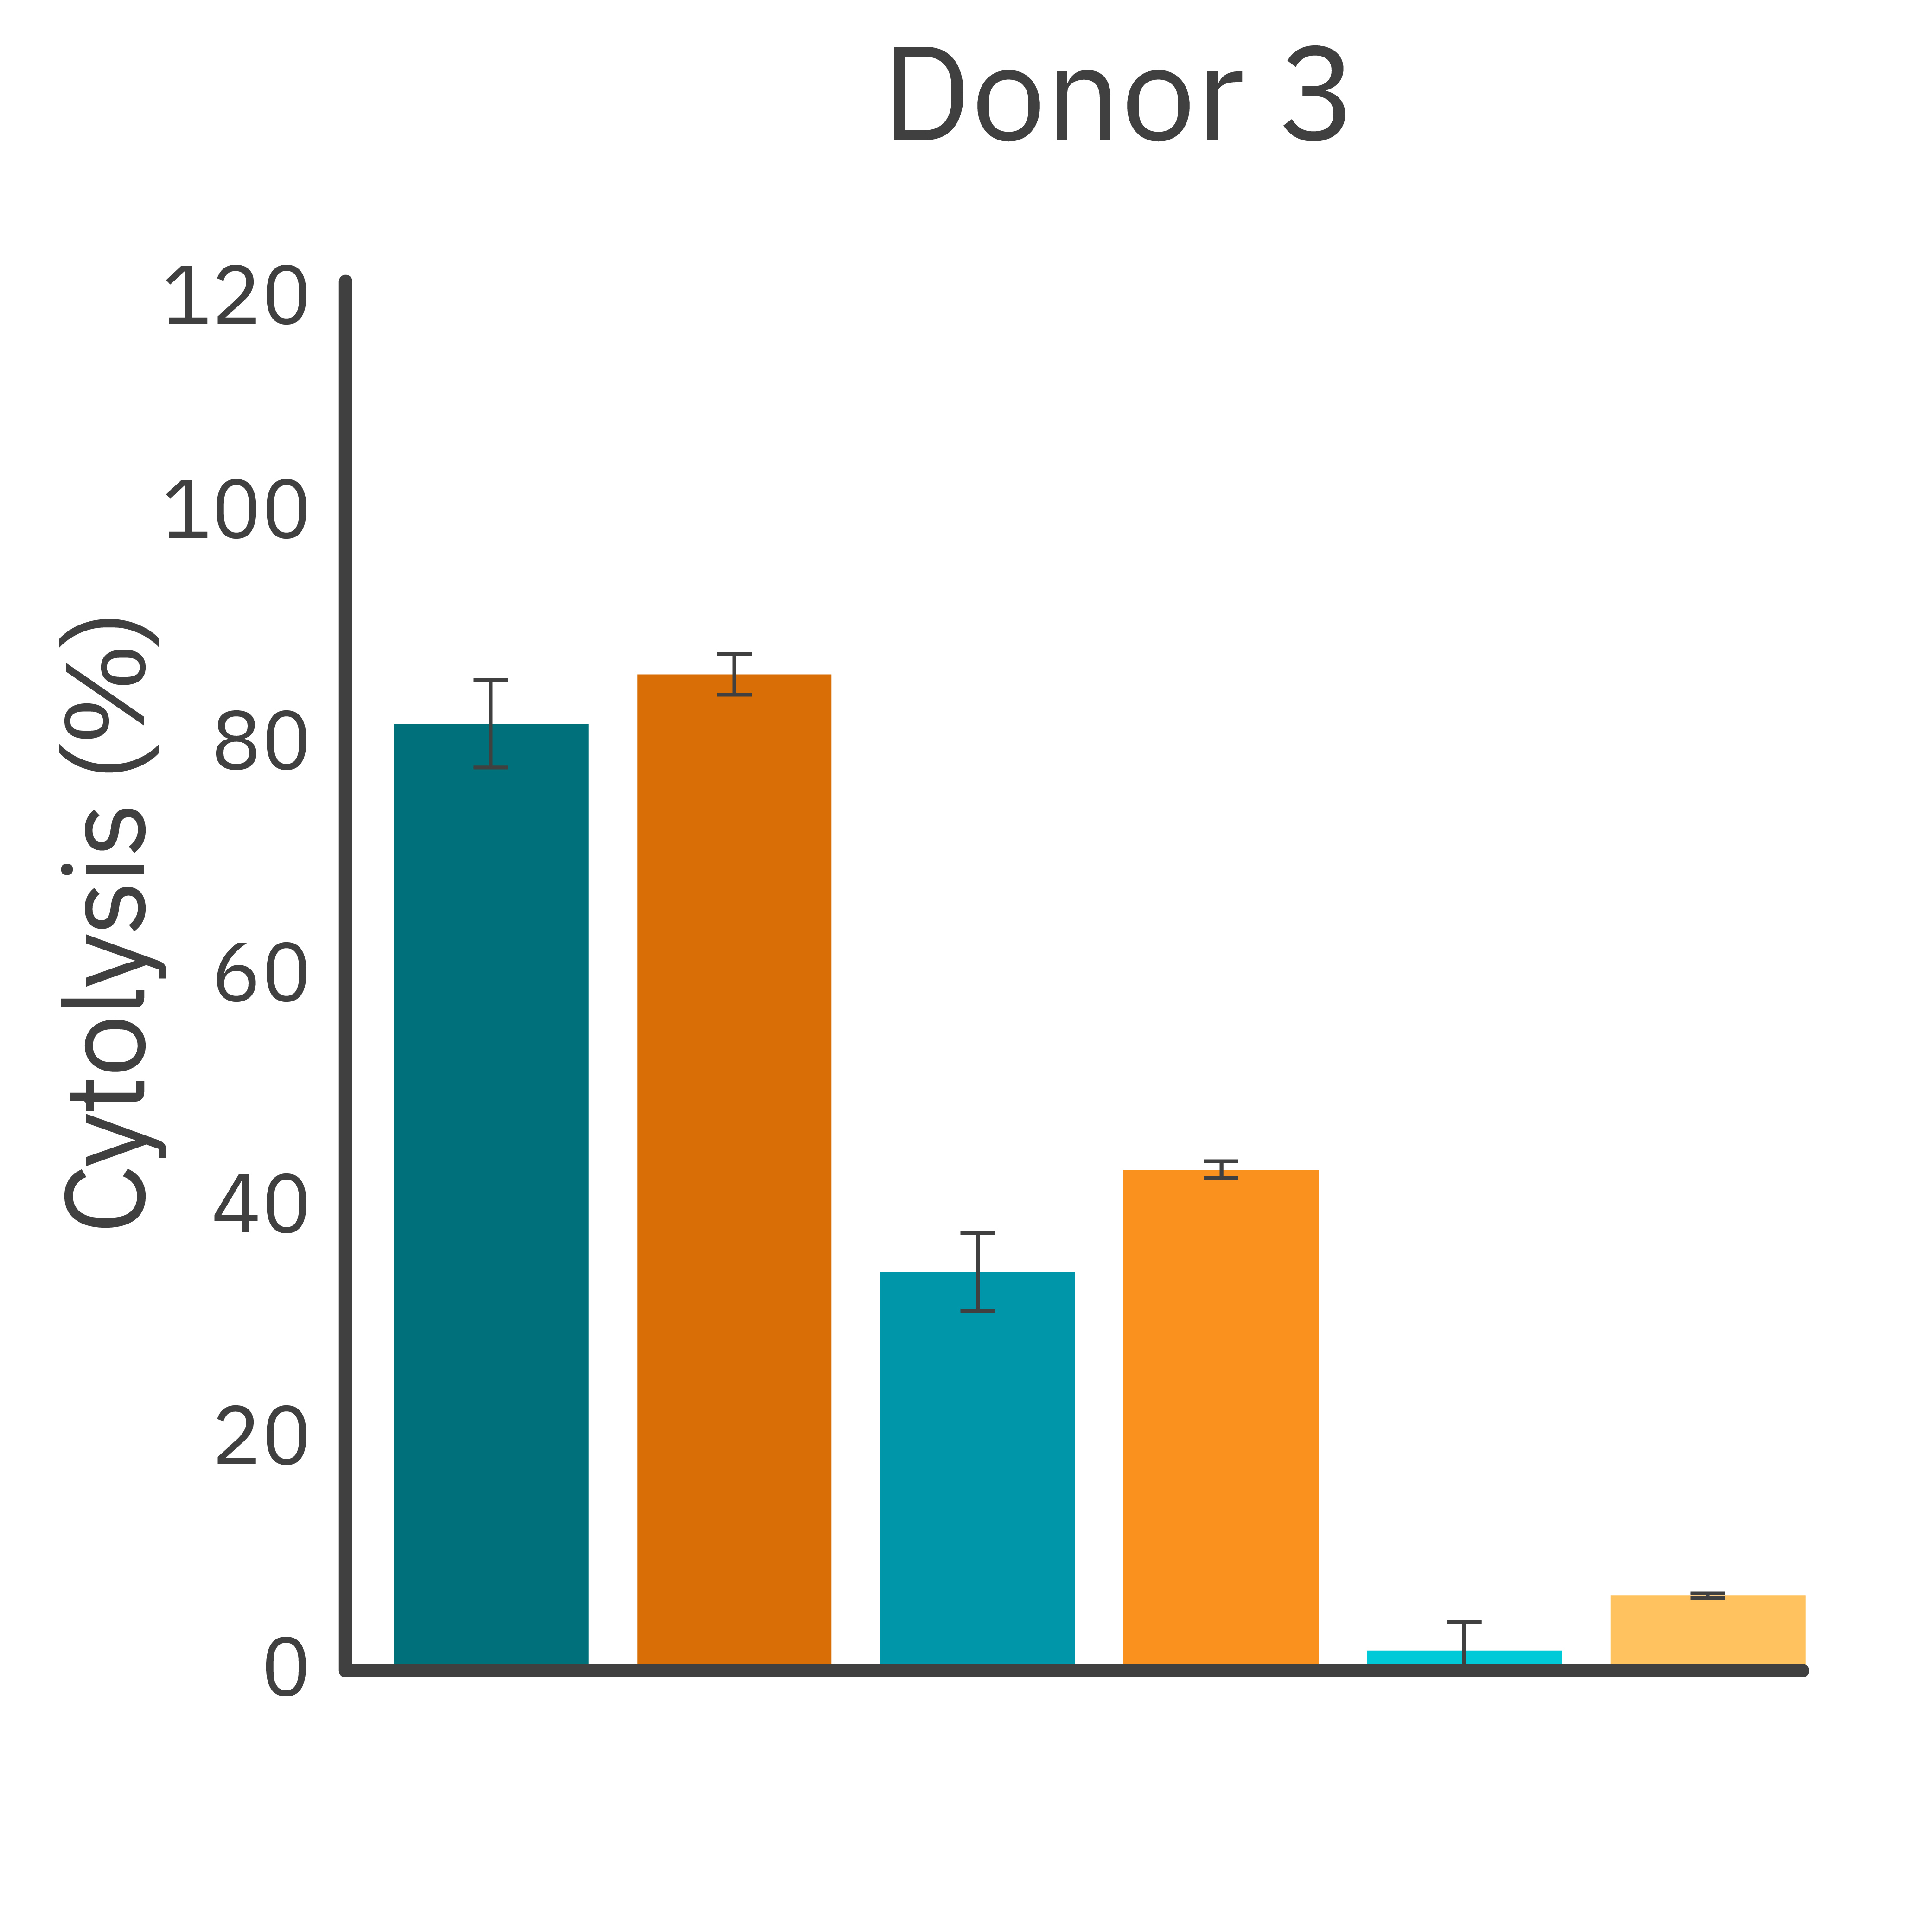 Antibody-dependent cellular cytotoxicity across donors.